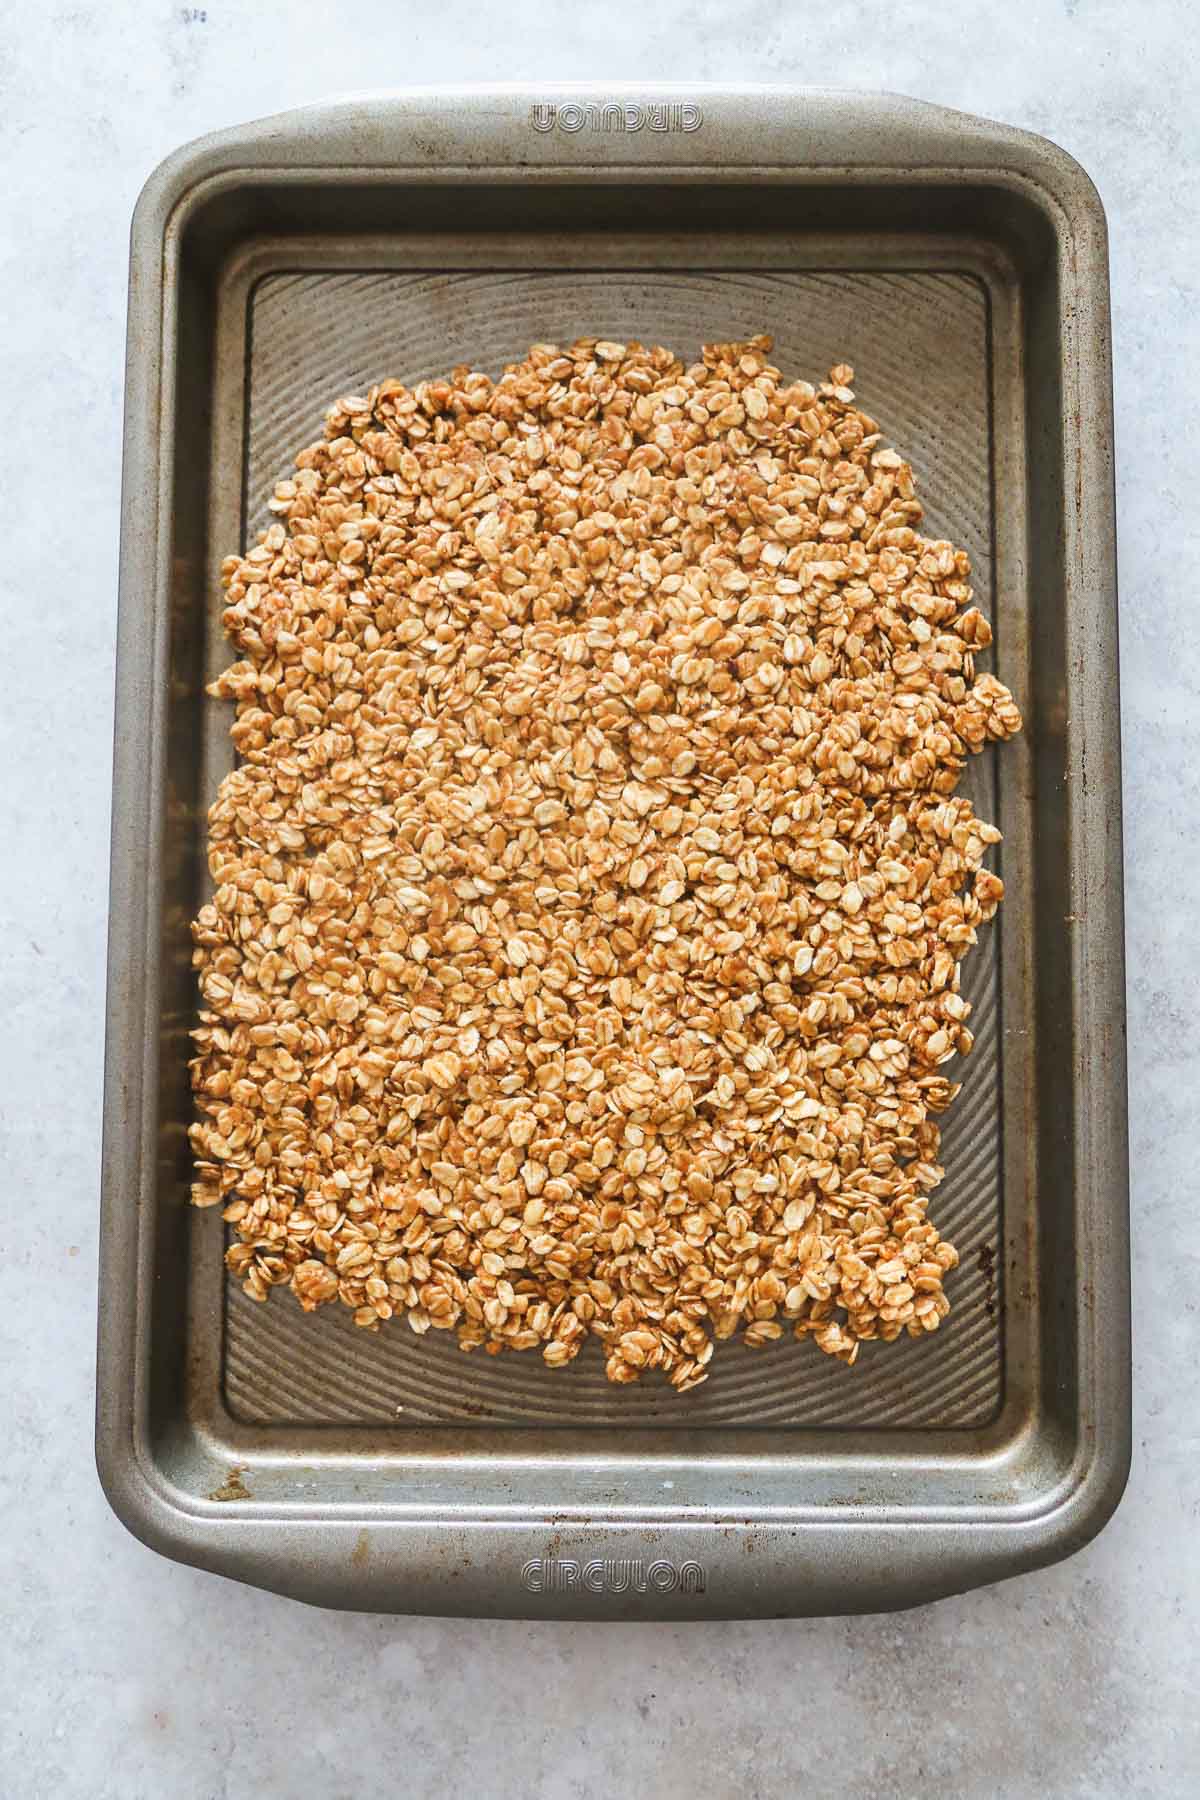 baking the granola on a baking tray